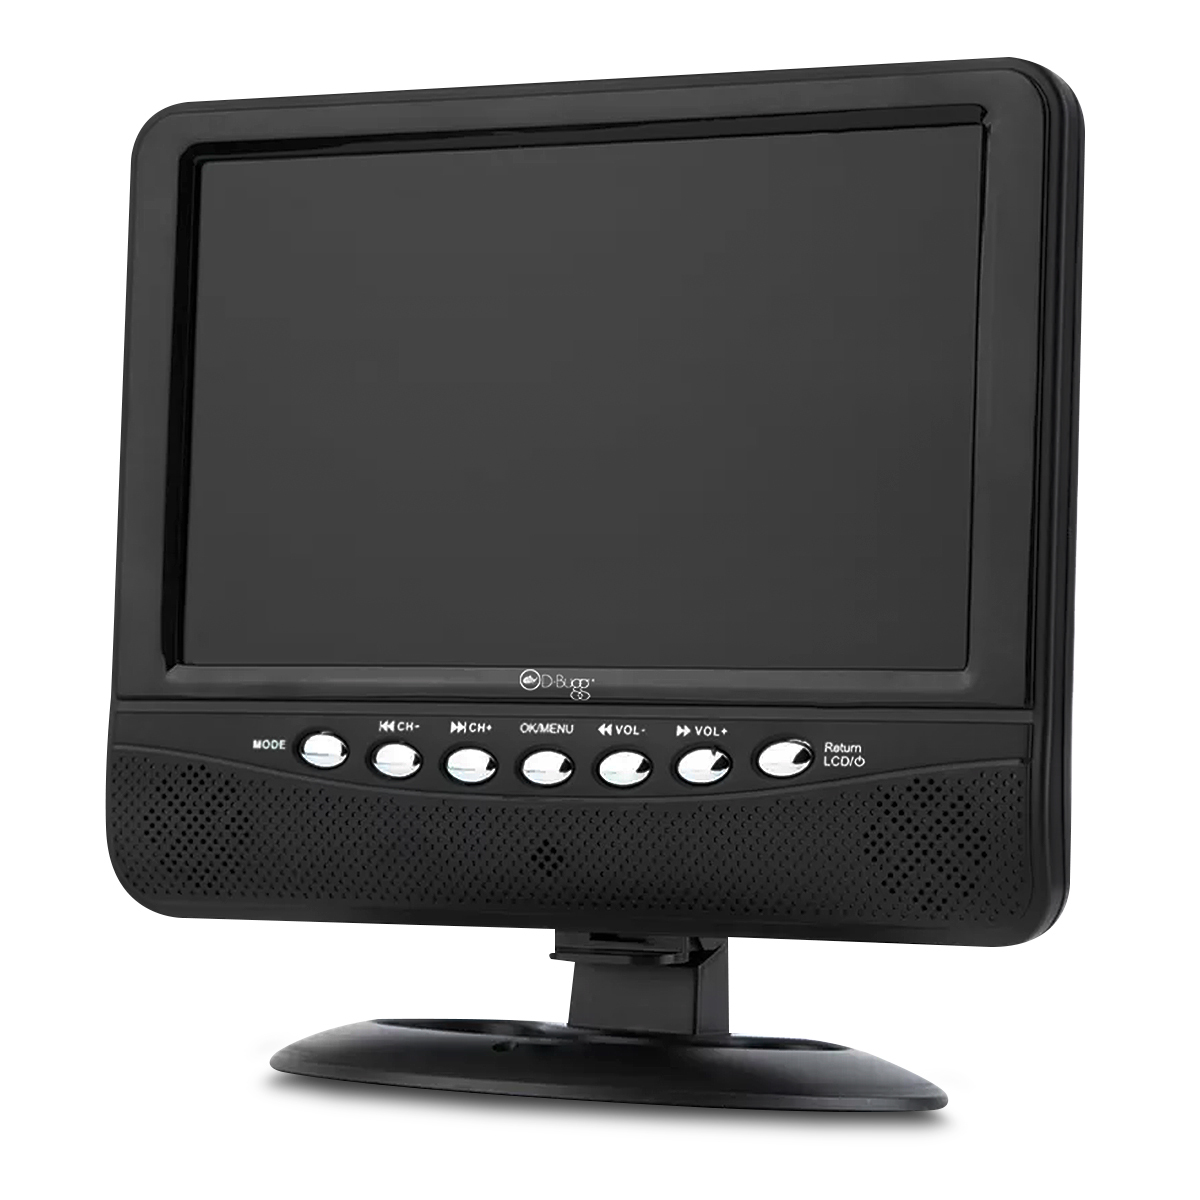 Pantalla JVC Smart TV Roku Frameless SI43FRF 43 pulg. Led FHD, Pantallas, Pantallas, Audio y video, Todas, Categoría